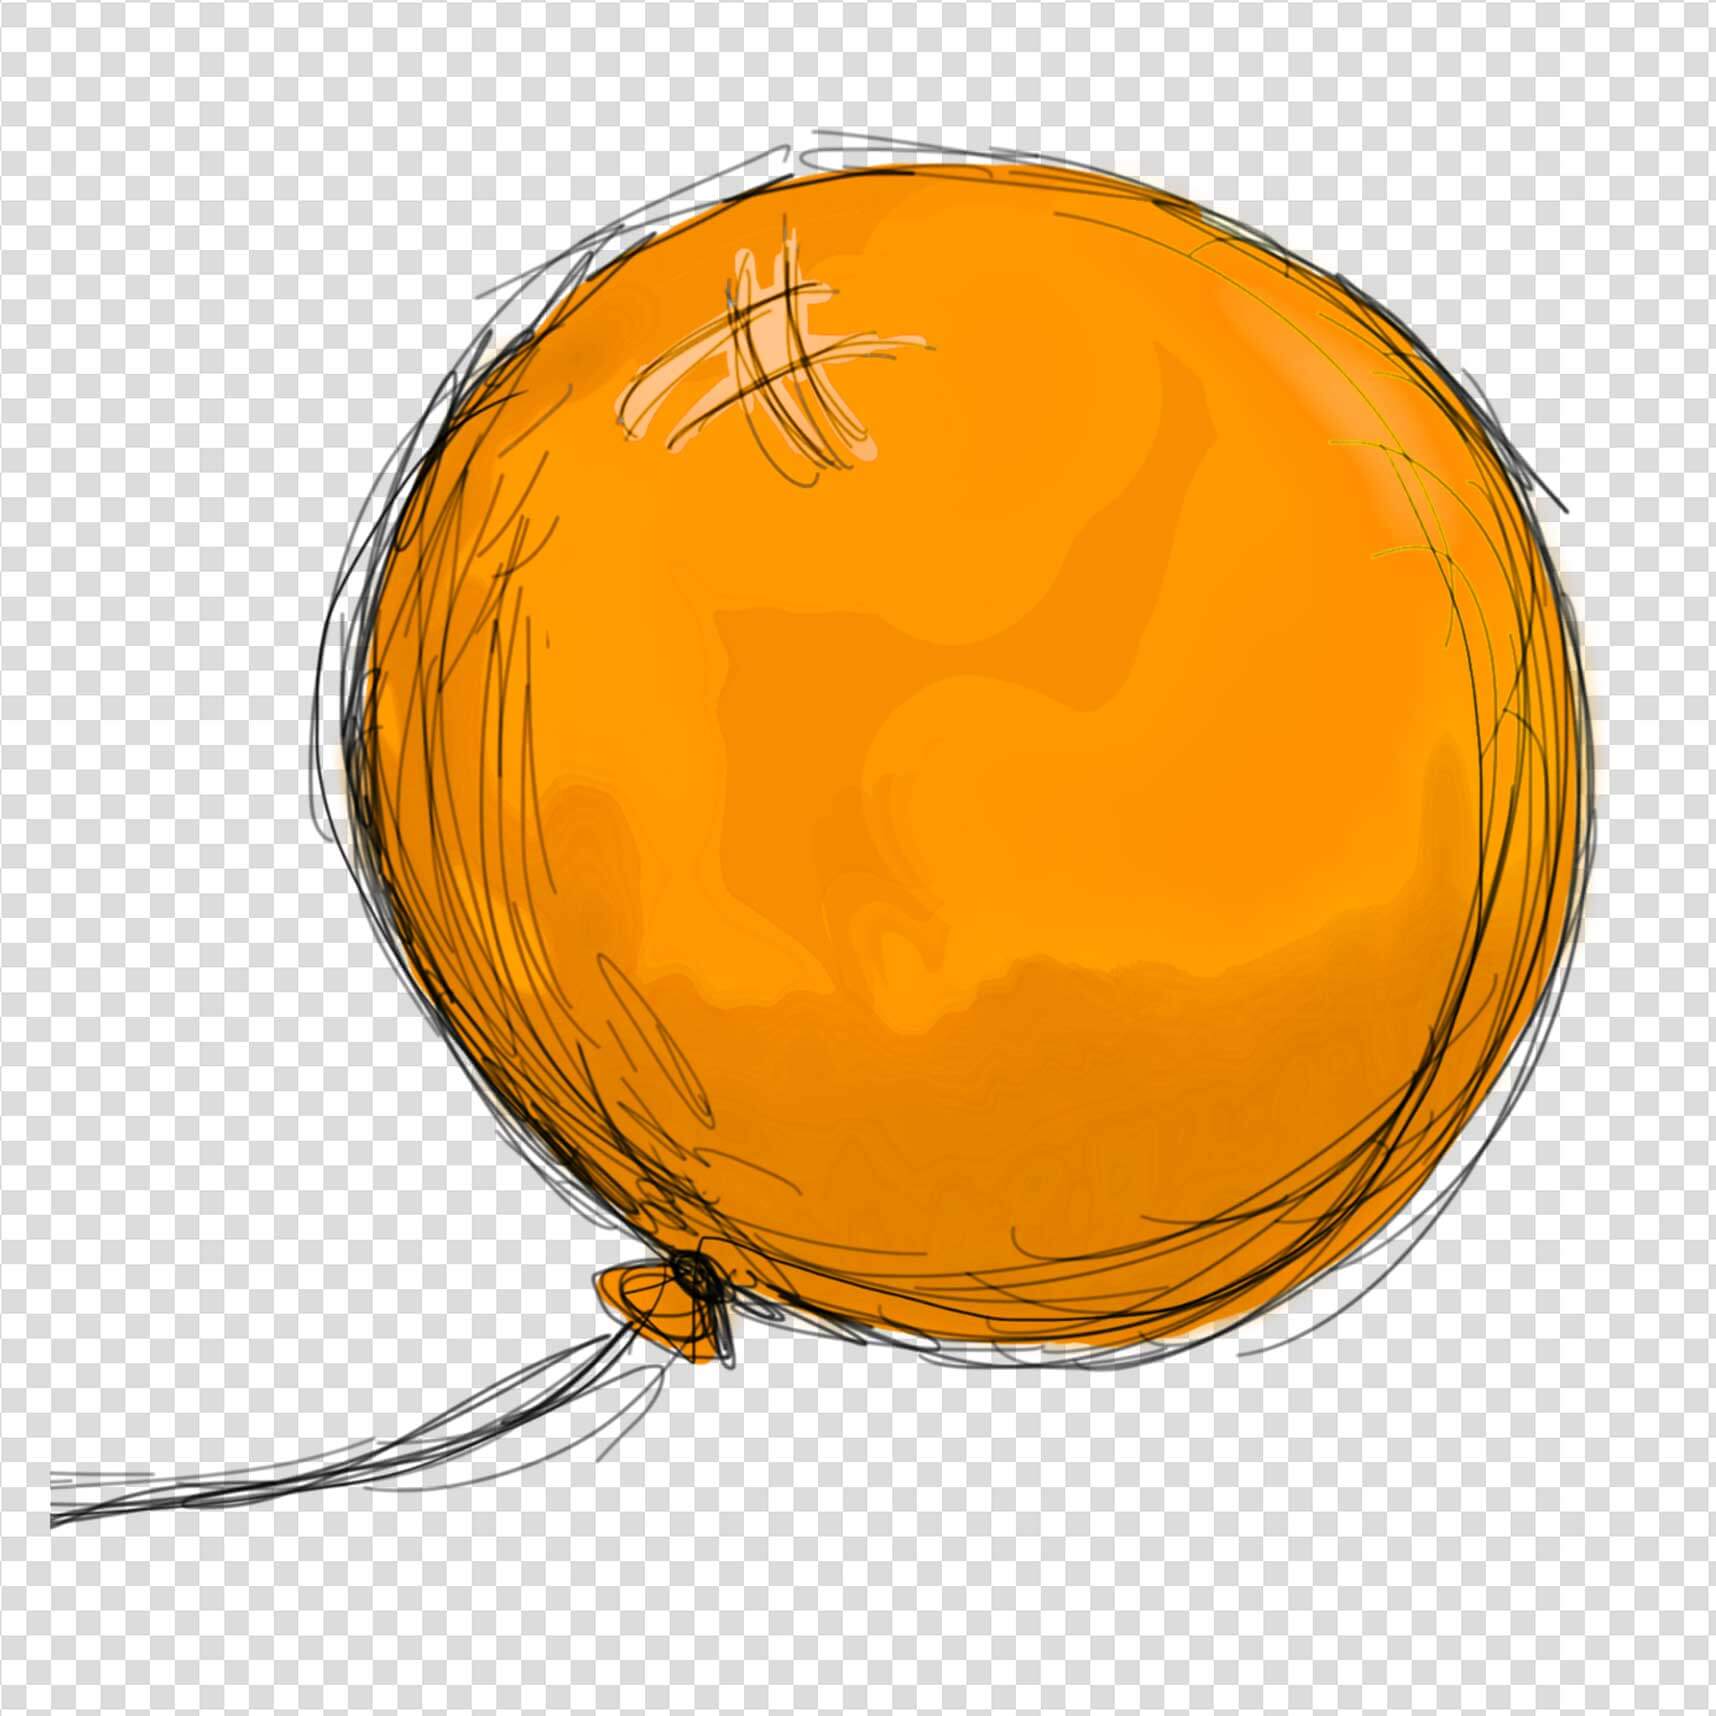 Balloon Clip Art - Clipartion.com | Balloon clipart, Balloon template,  Fruit coloring pages